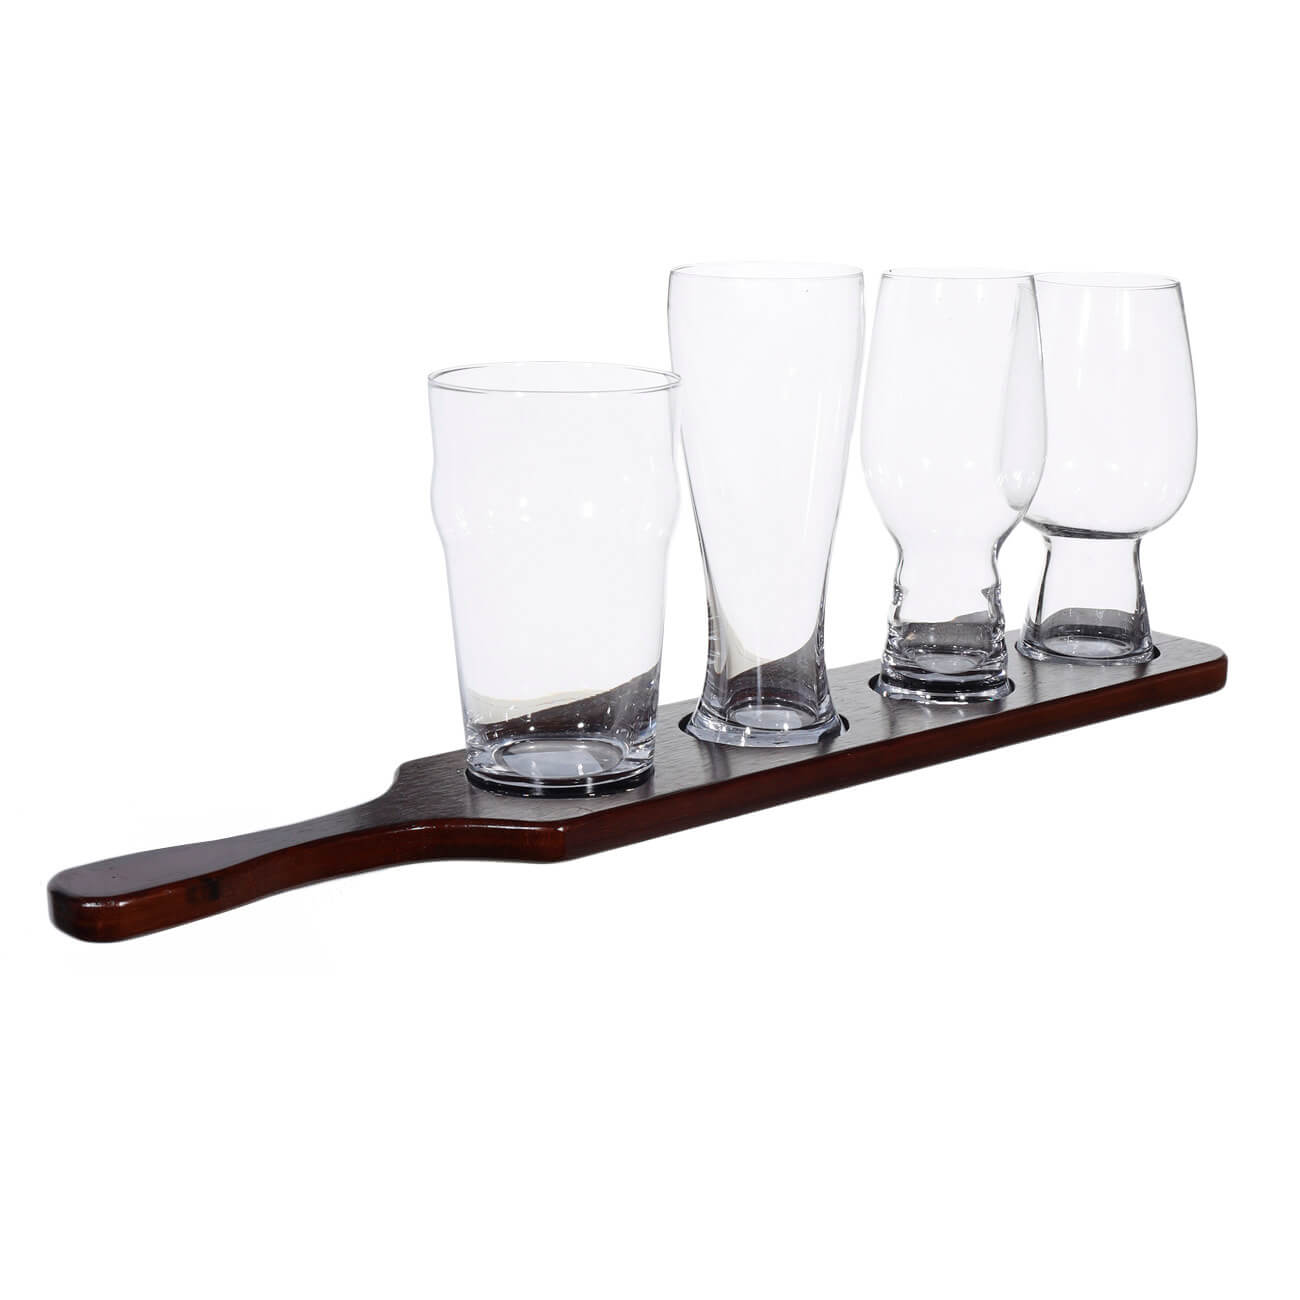 Набор стаканов для пива, 4 шт, на подставке, стекло/дерево, Noble tree набор стаканов loraine